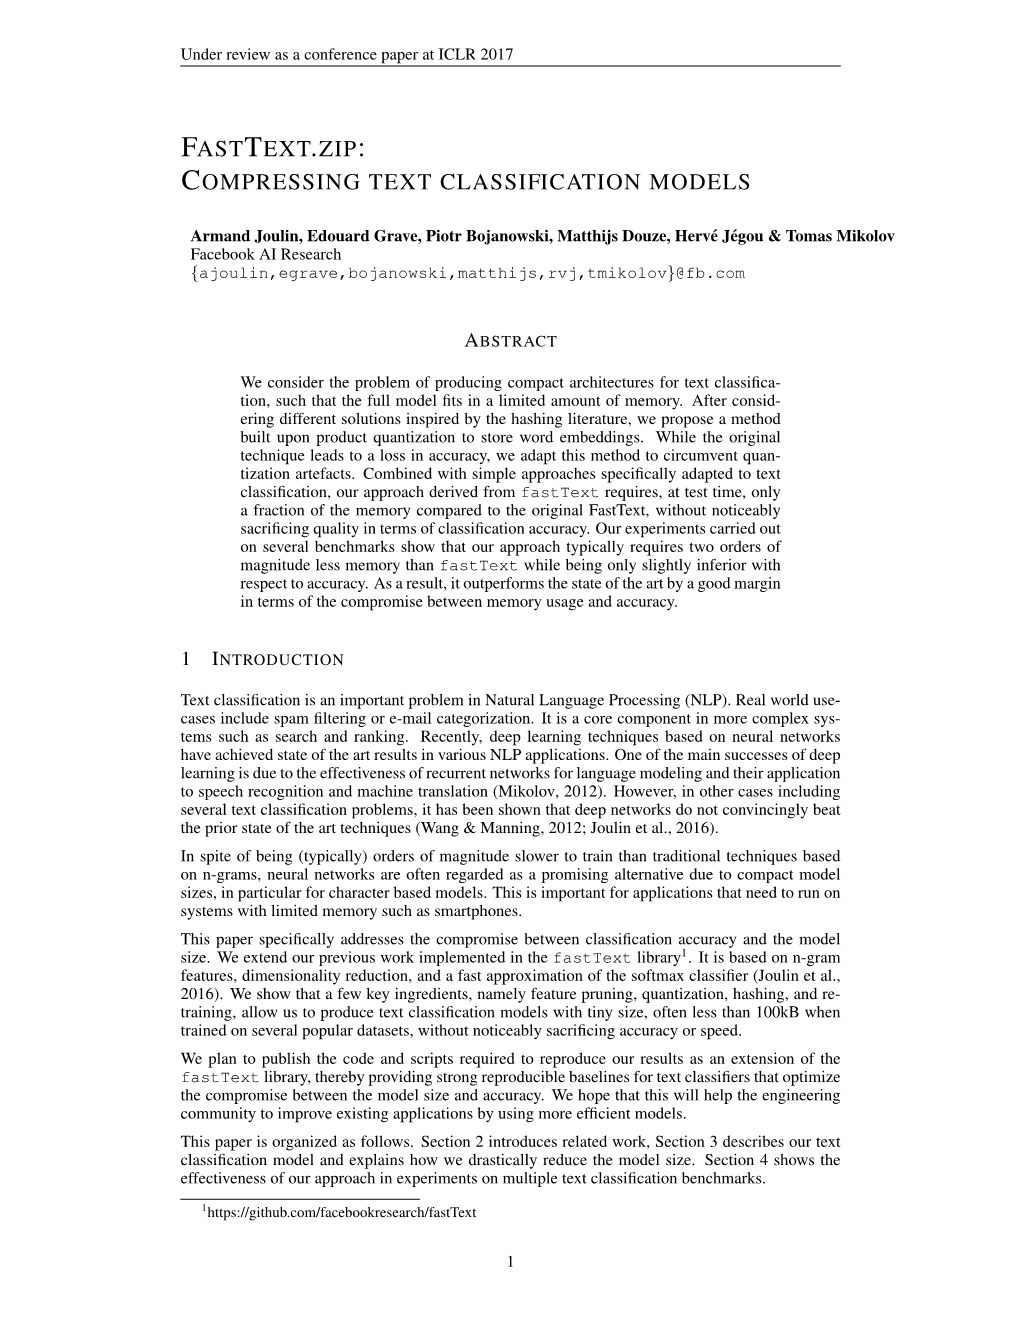 Fasttext.Zip: Compressing Text Classification Models